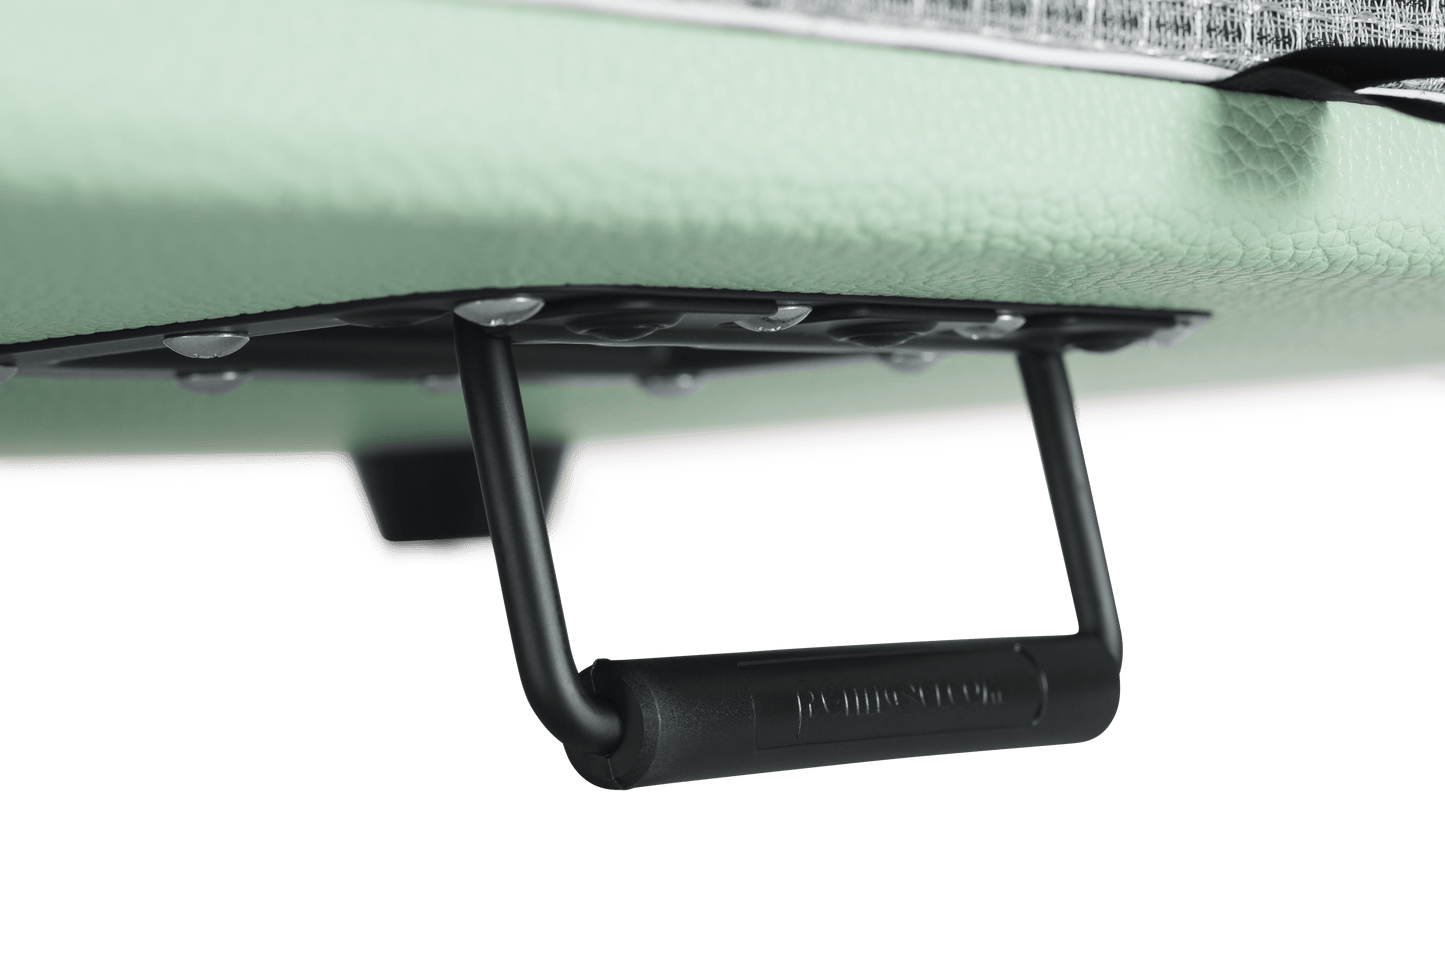 Gator Vintage Amp Vibe Rack Case - 4U Seafoam Green - PSSL ProSound and Stage Lighting